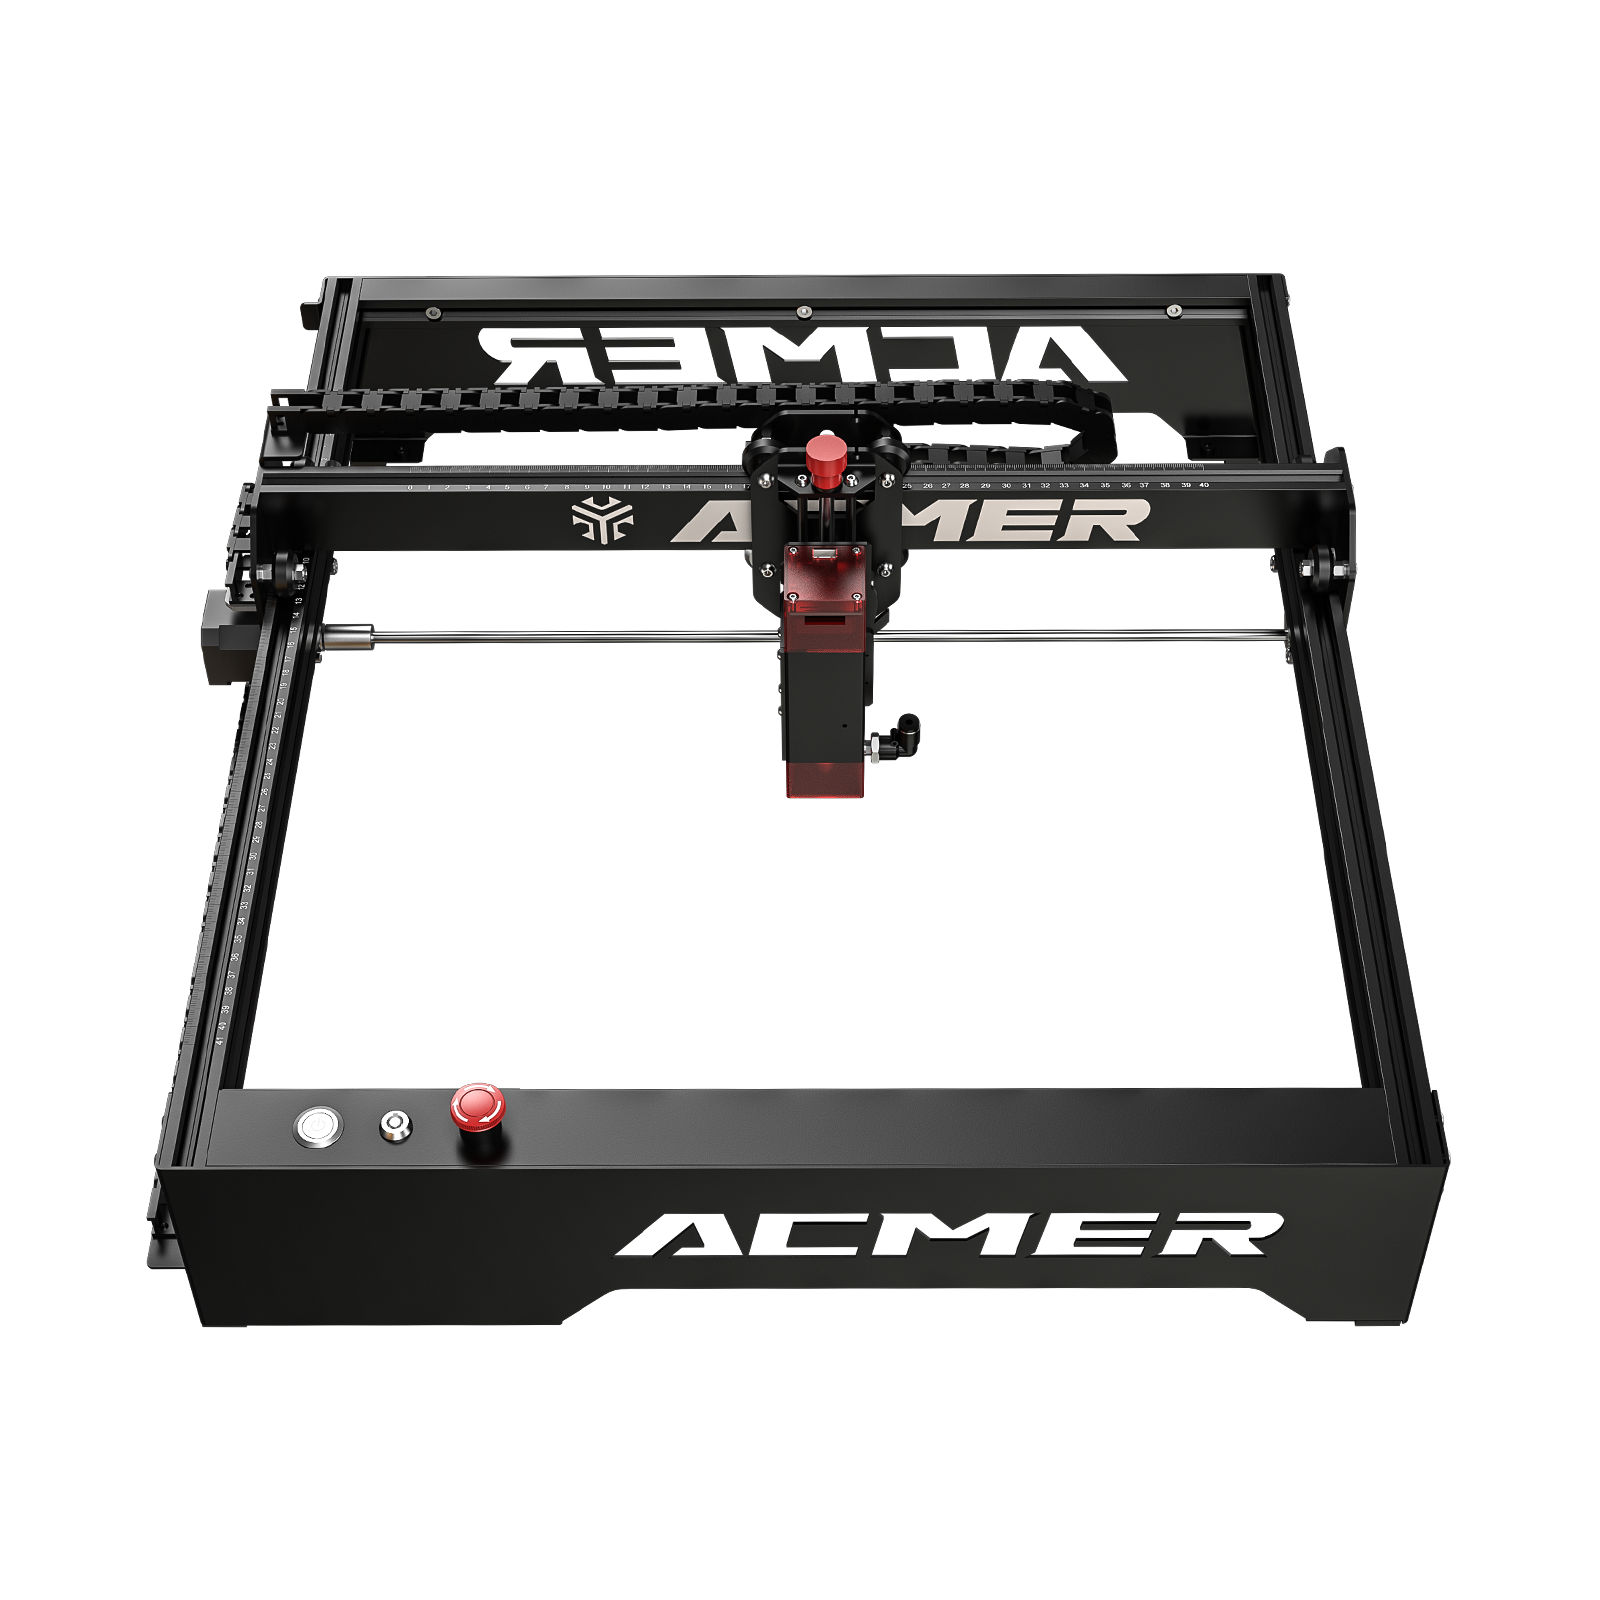 Support for ACMER P1 laser engraver